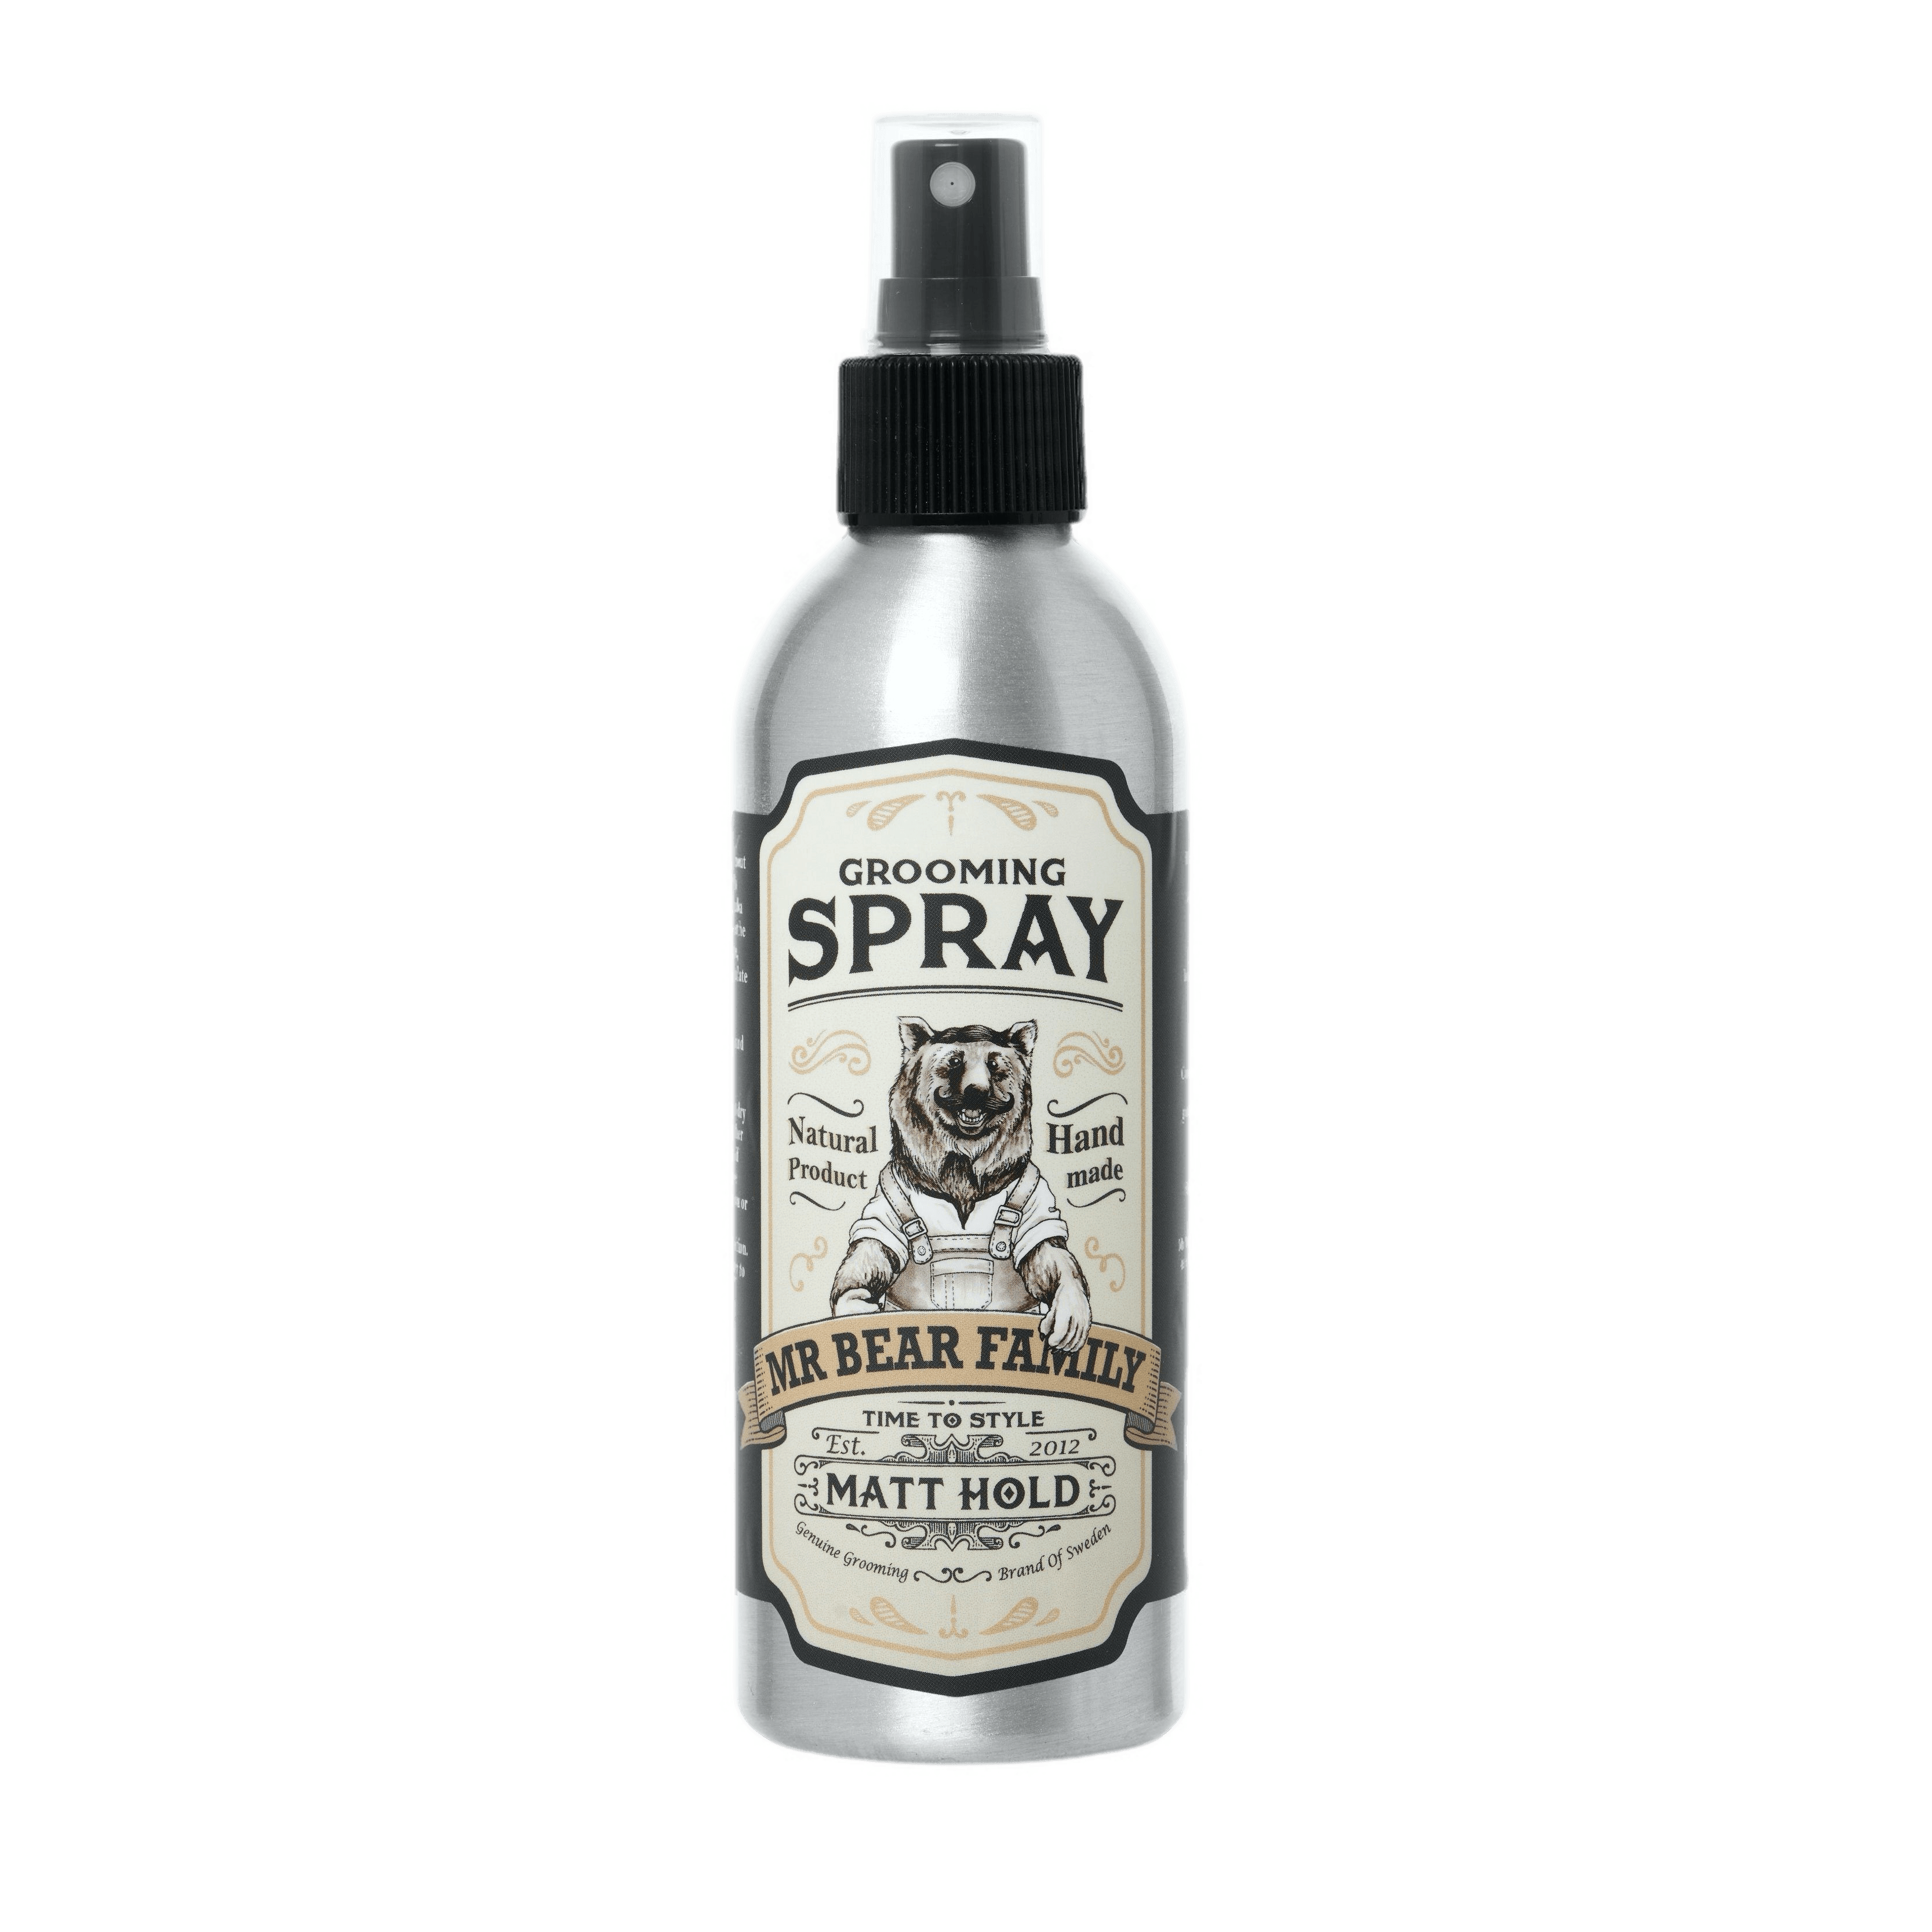 Mr Bear Family Grooming Spray - Matt hold 200 ml